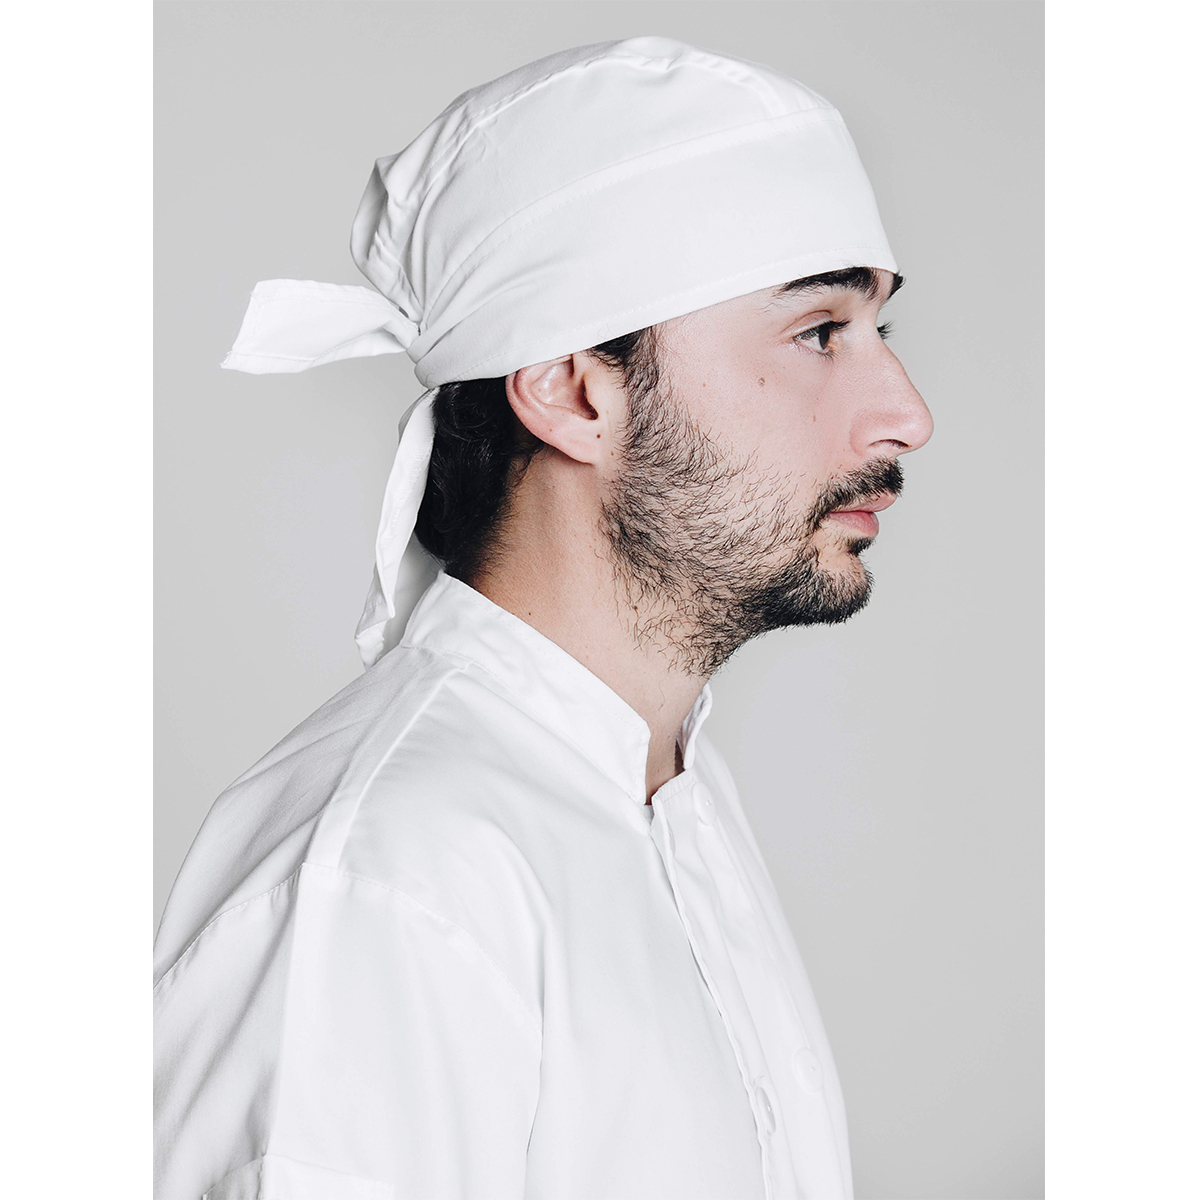 Gorro Chef Pirata Blanco by All in Chef, uniformes, Hoteles y  Restaurantes, Categorias